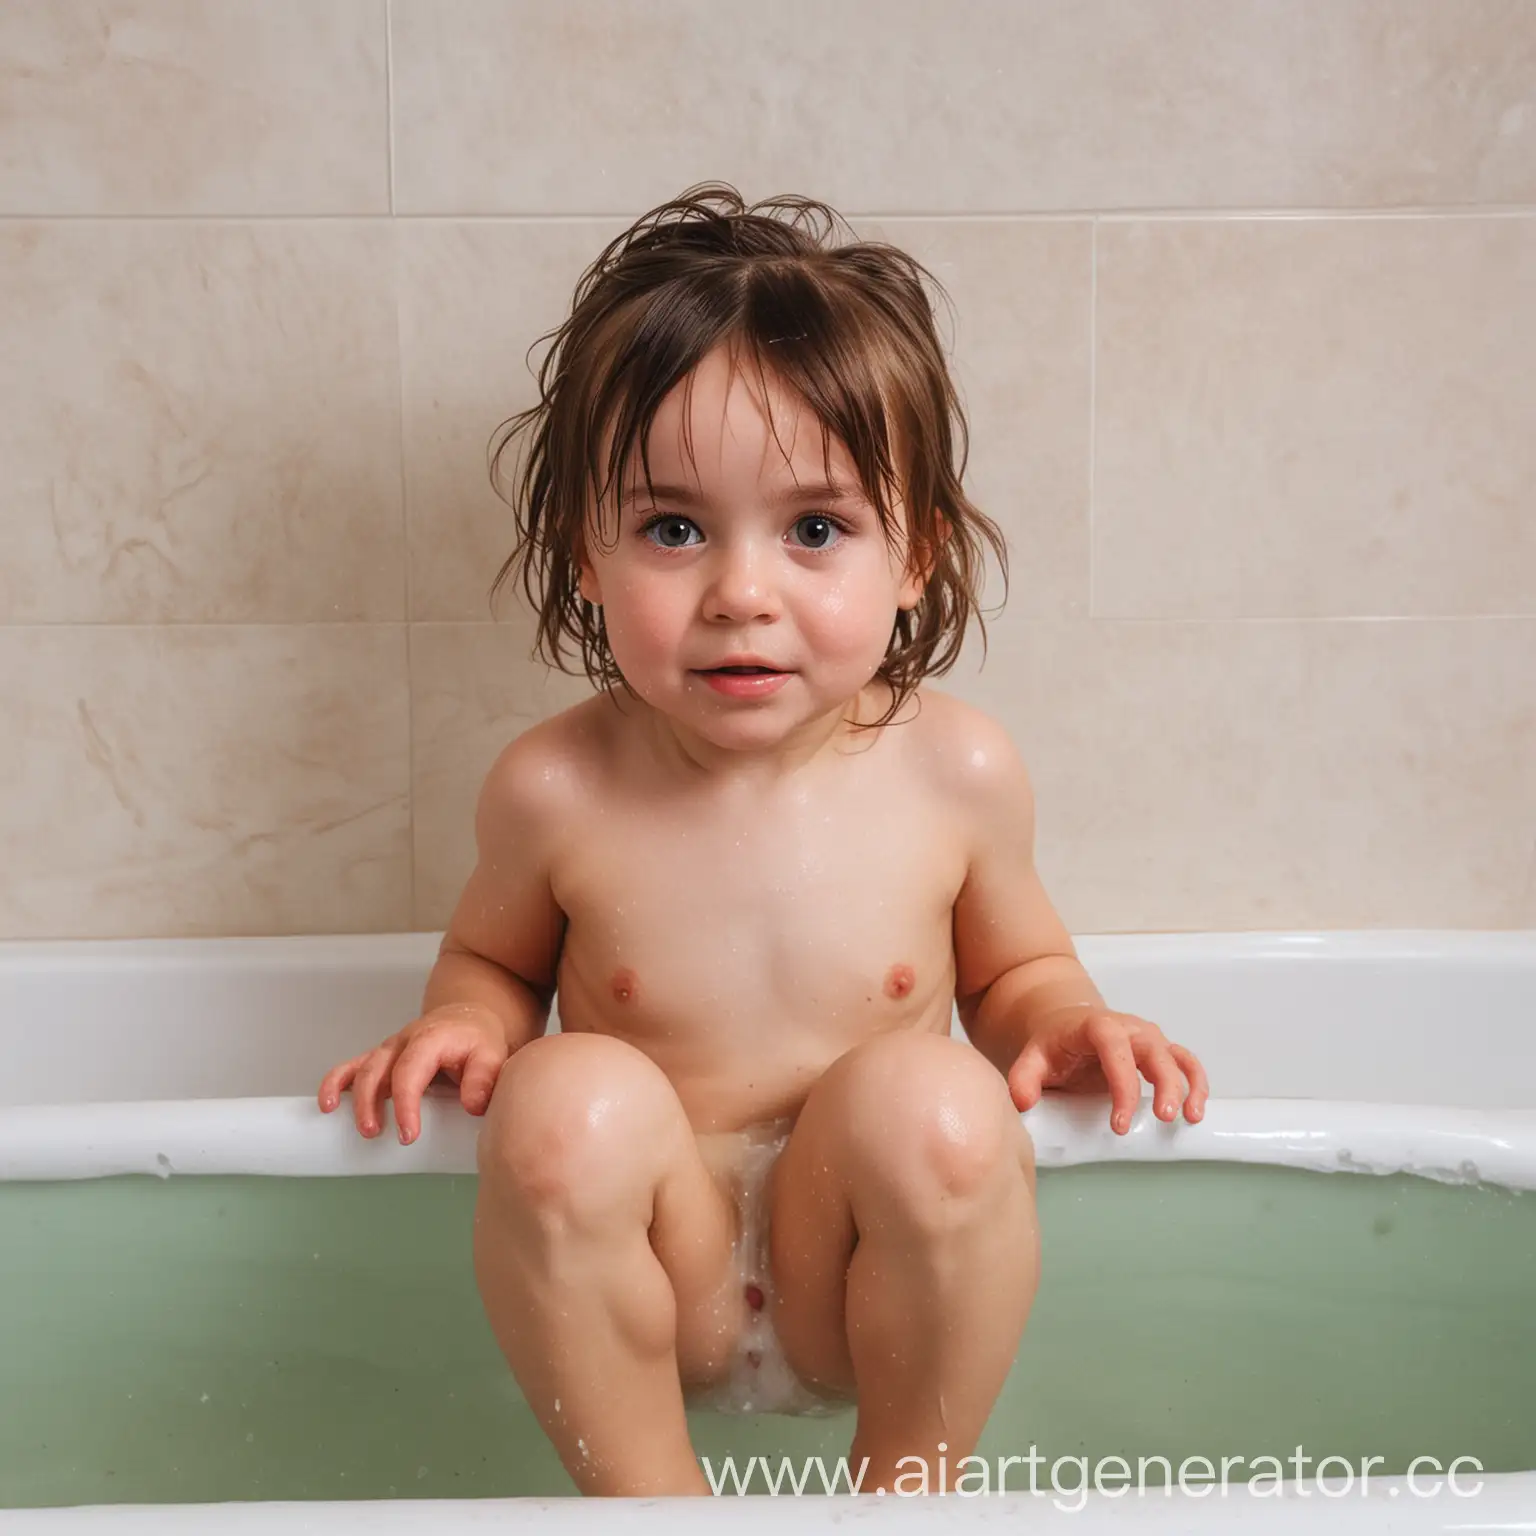 Joyful-Bath-Time-Little-Girl-Enjoying-a-Soothing-Soak